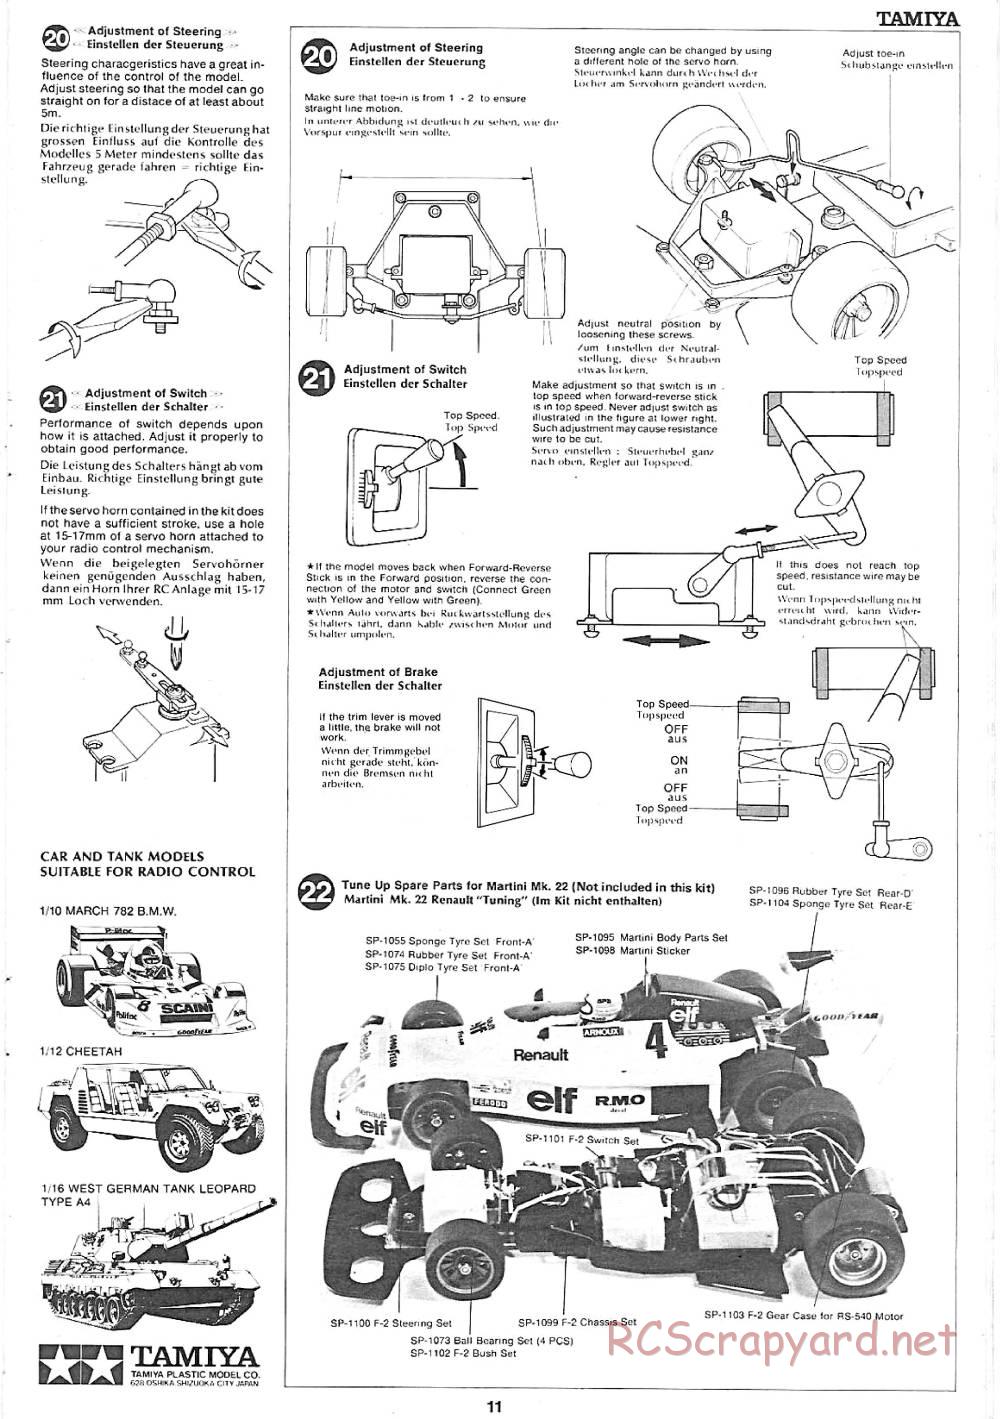 Tamiya - Martini Mk22 Renault (F2) - 58014 - Manual - Page 11